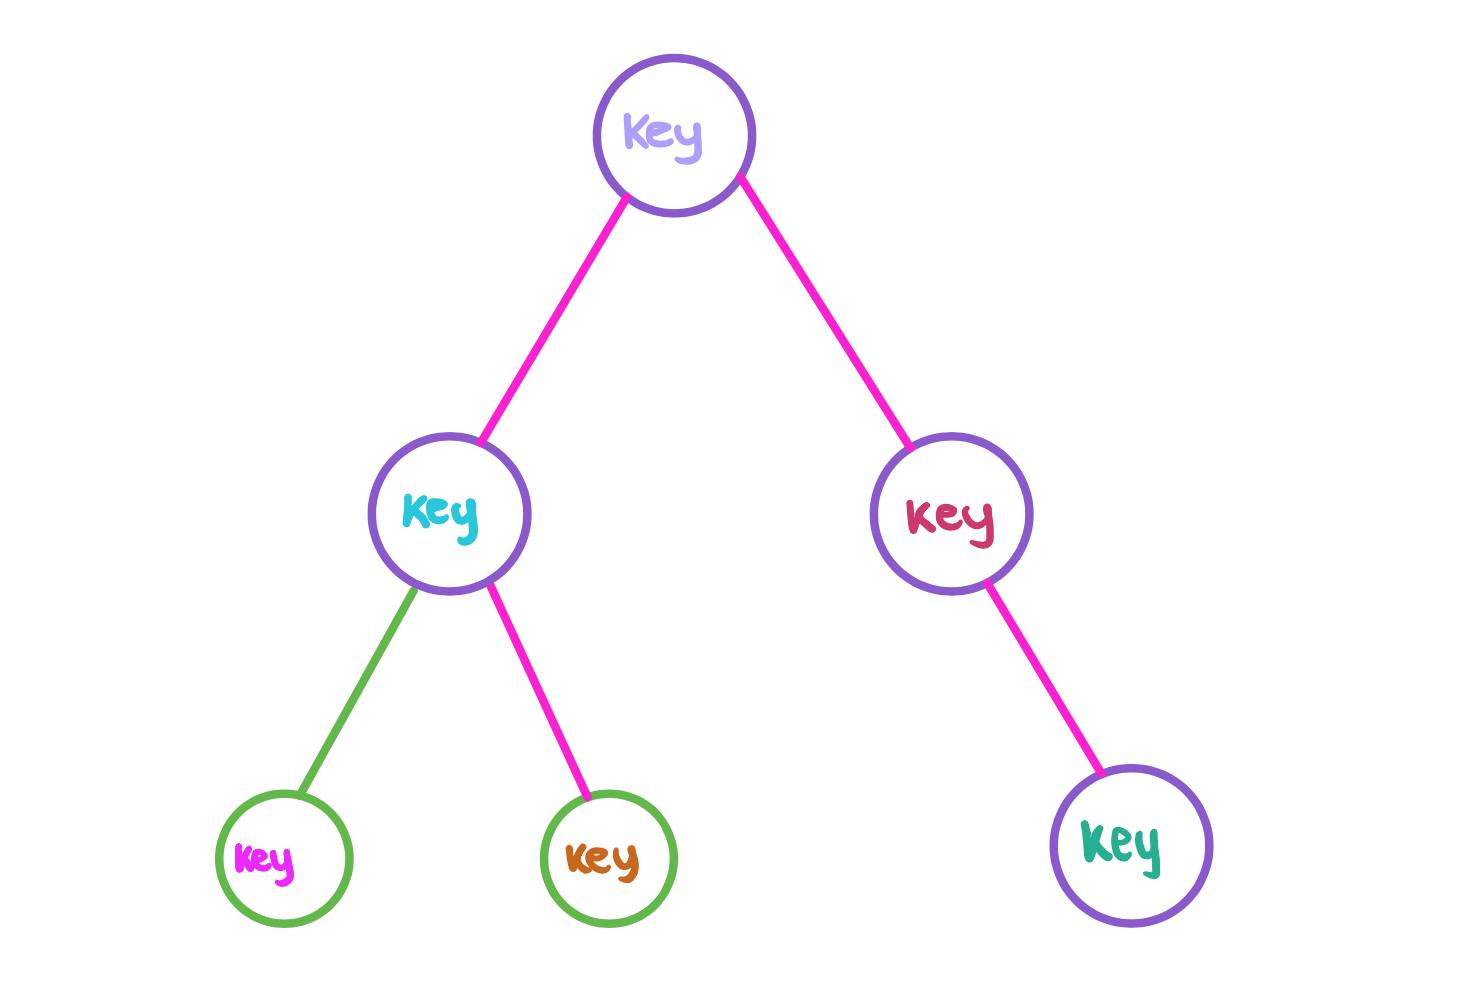 visual representation of the virtual dom tree with keys corresponding to nodes